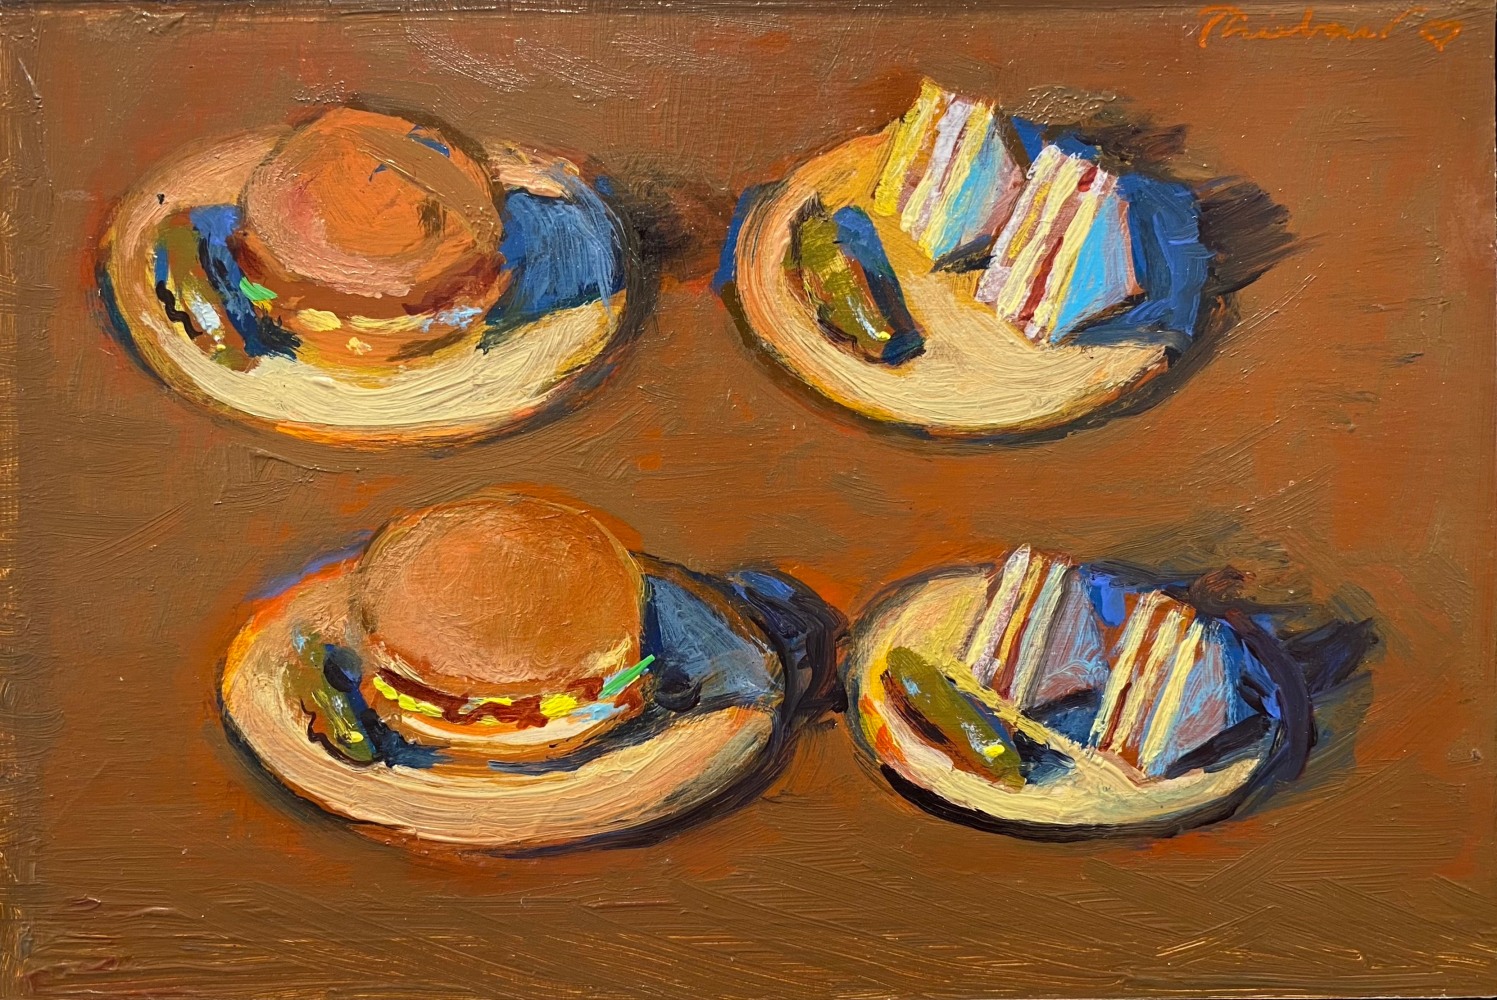 Wayne Thiebaud, Four Sandwiches, 2003, oil on illustration board, 4 3/4 x 7 3/16 in.